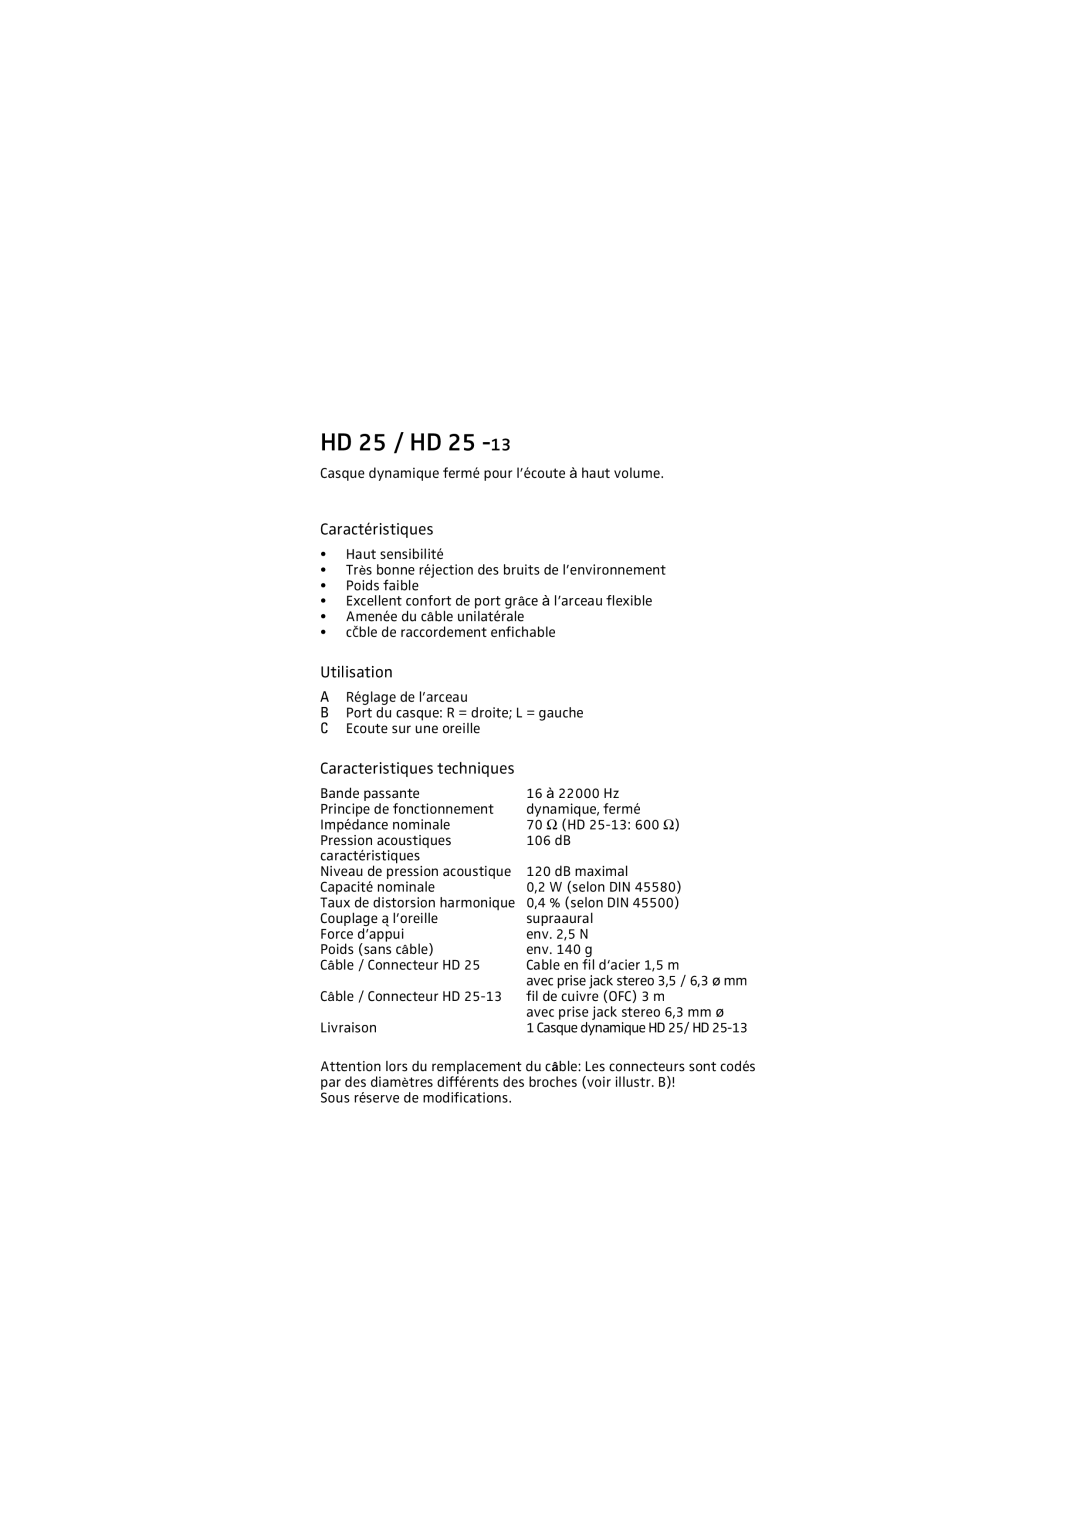 Sennheiser HD 25 - 13 manual Caractéristiques, Utilisation, Caracteristiques techniques, HD 25 / HD 